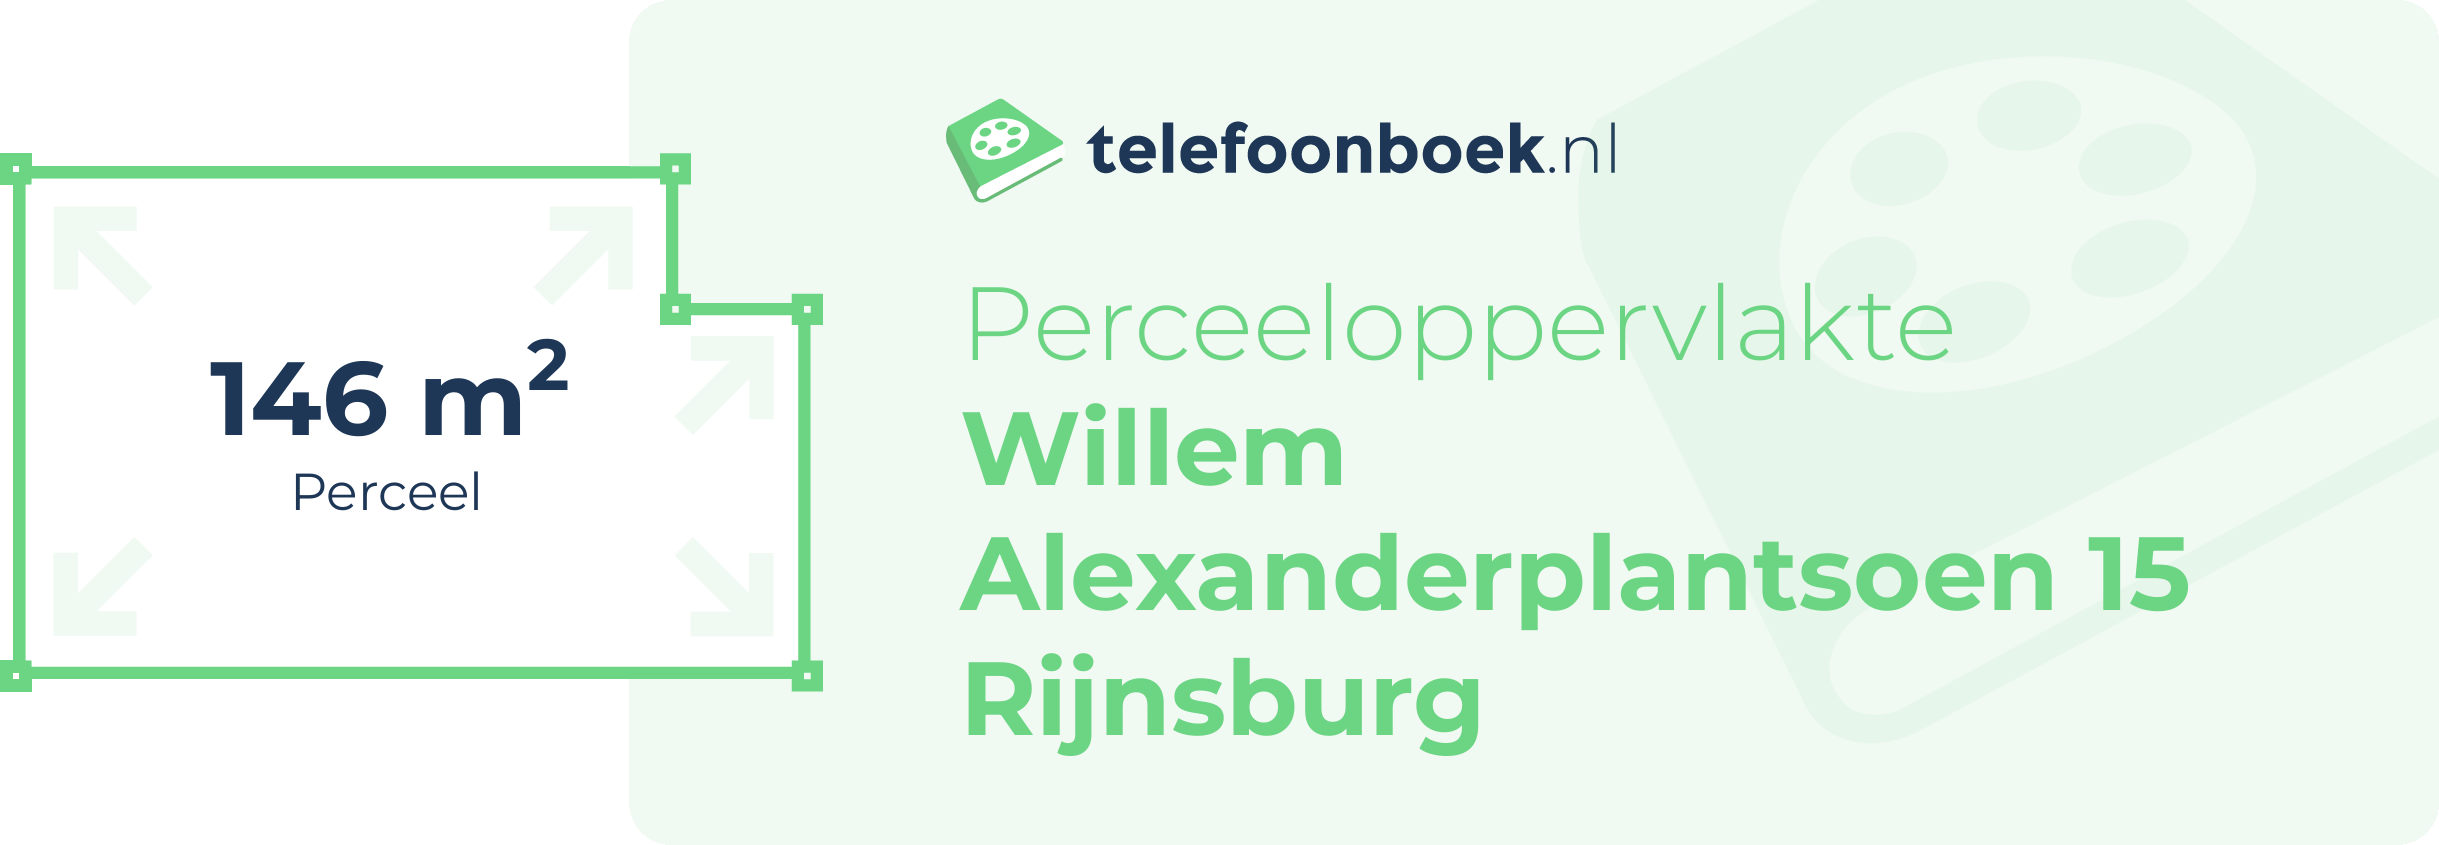 Perceeloppervlakte Willem Alexanderplantsoen 15 Rijnsburg